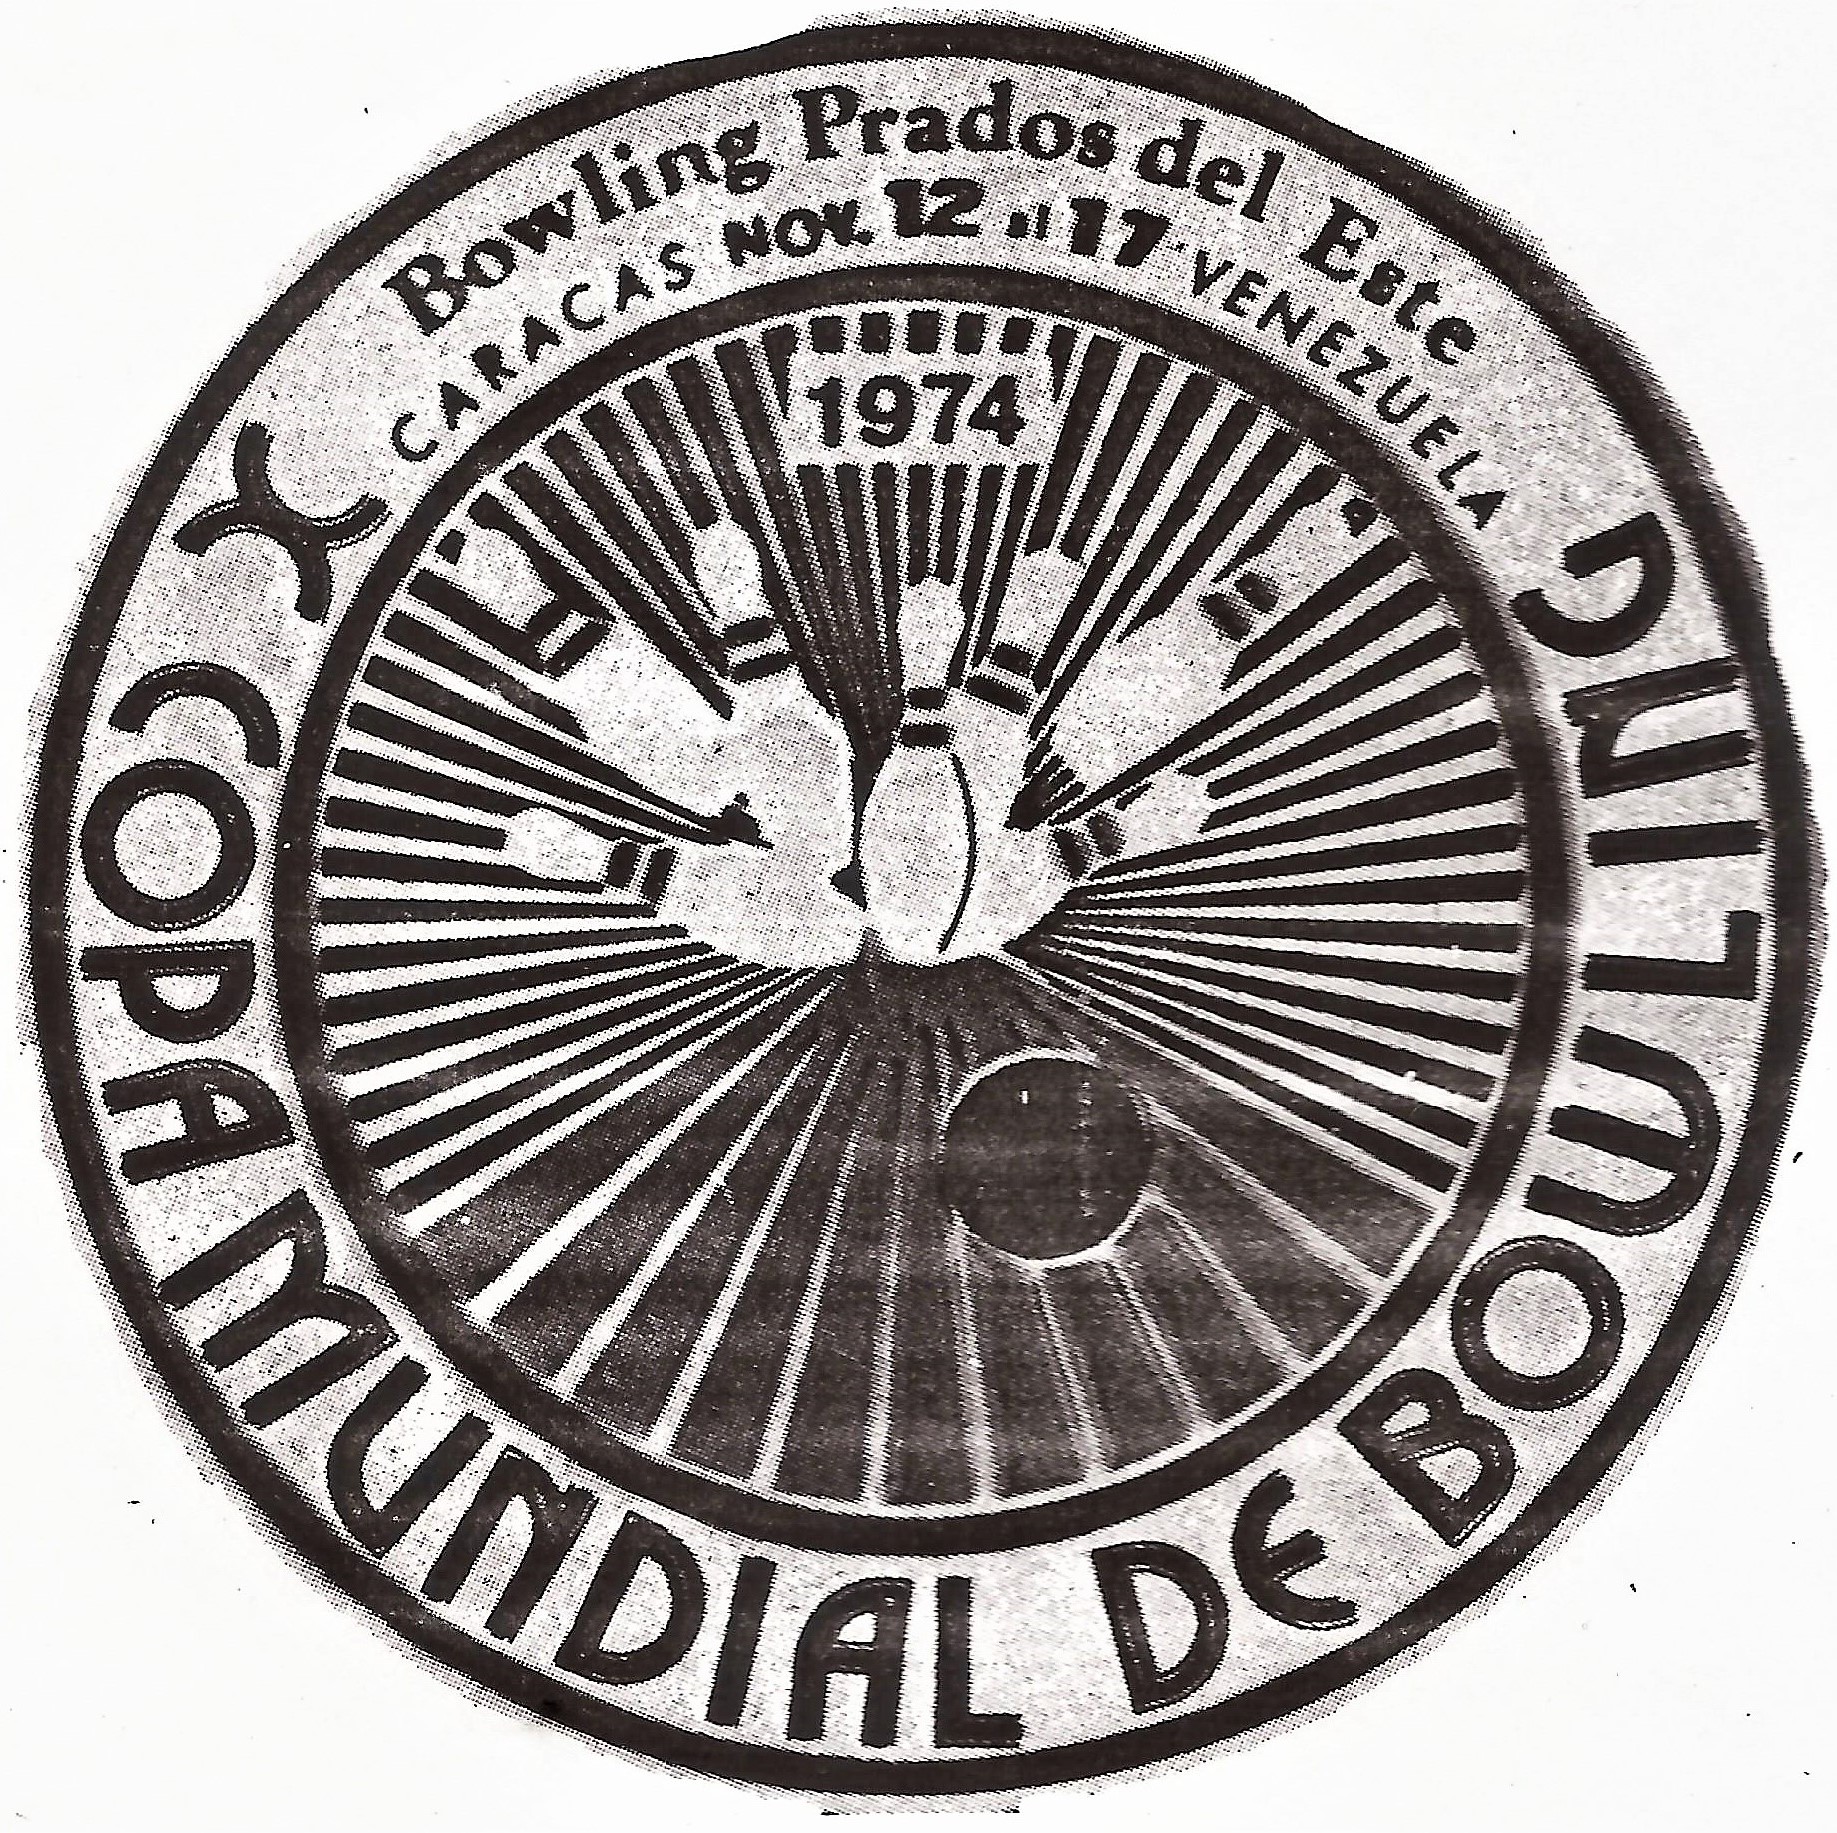 1974 - Caracas logo